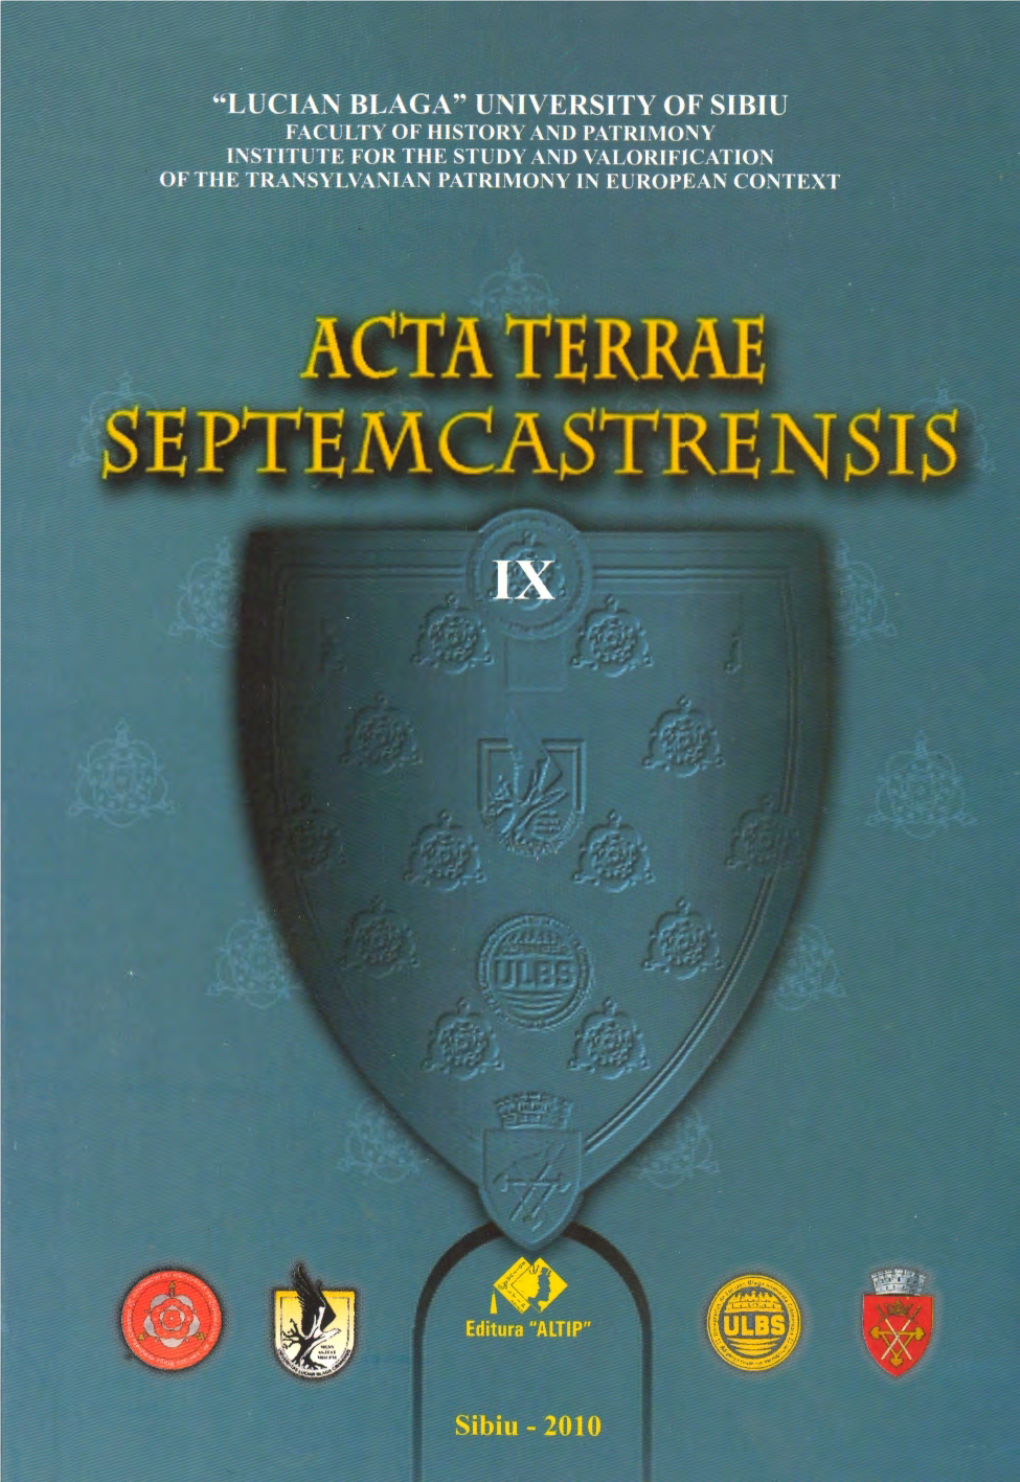 Acta Terrae Septemcastrensis, IX, 2010